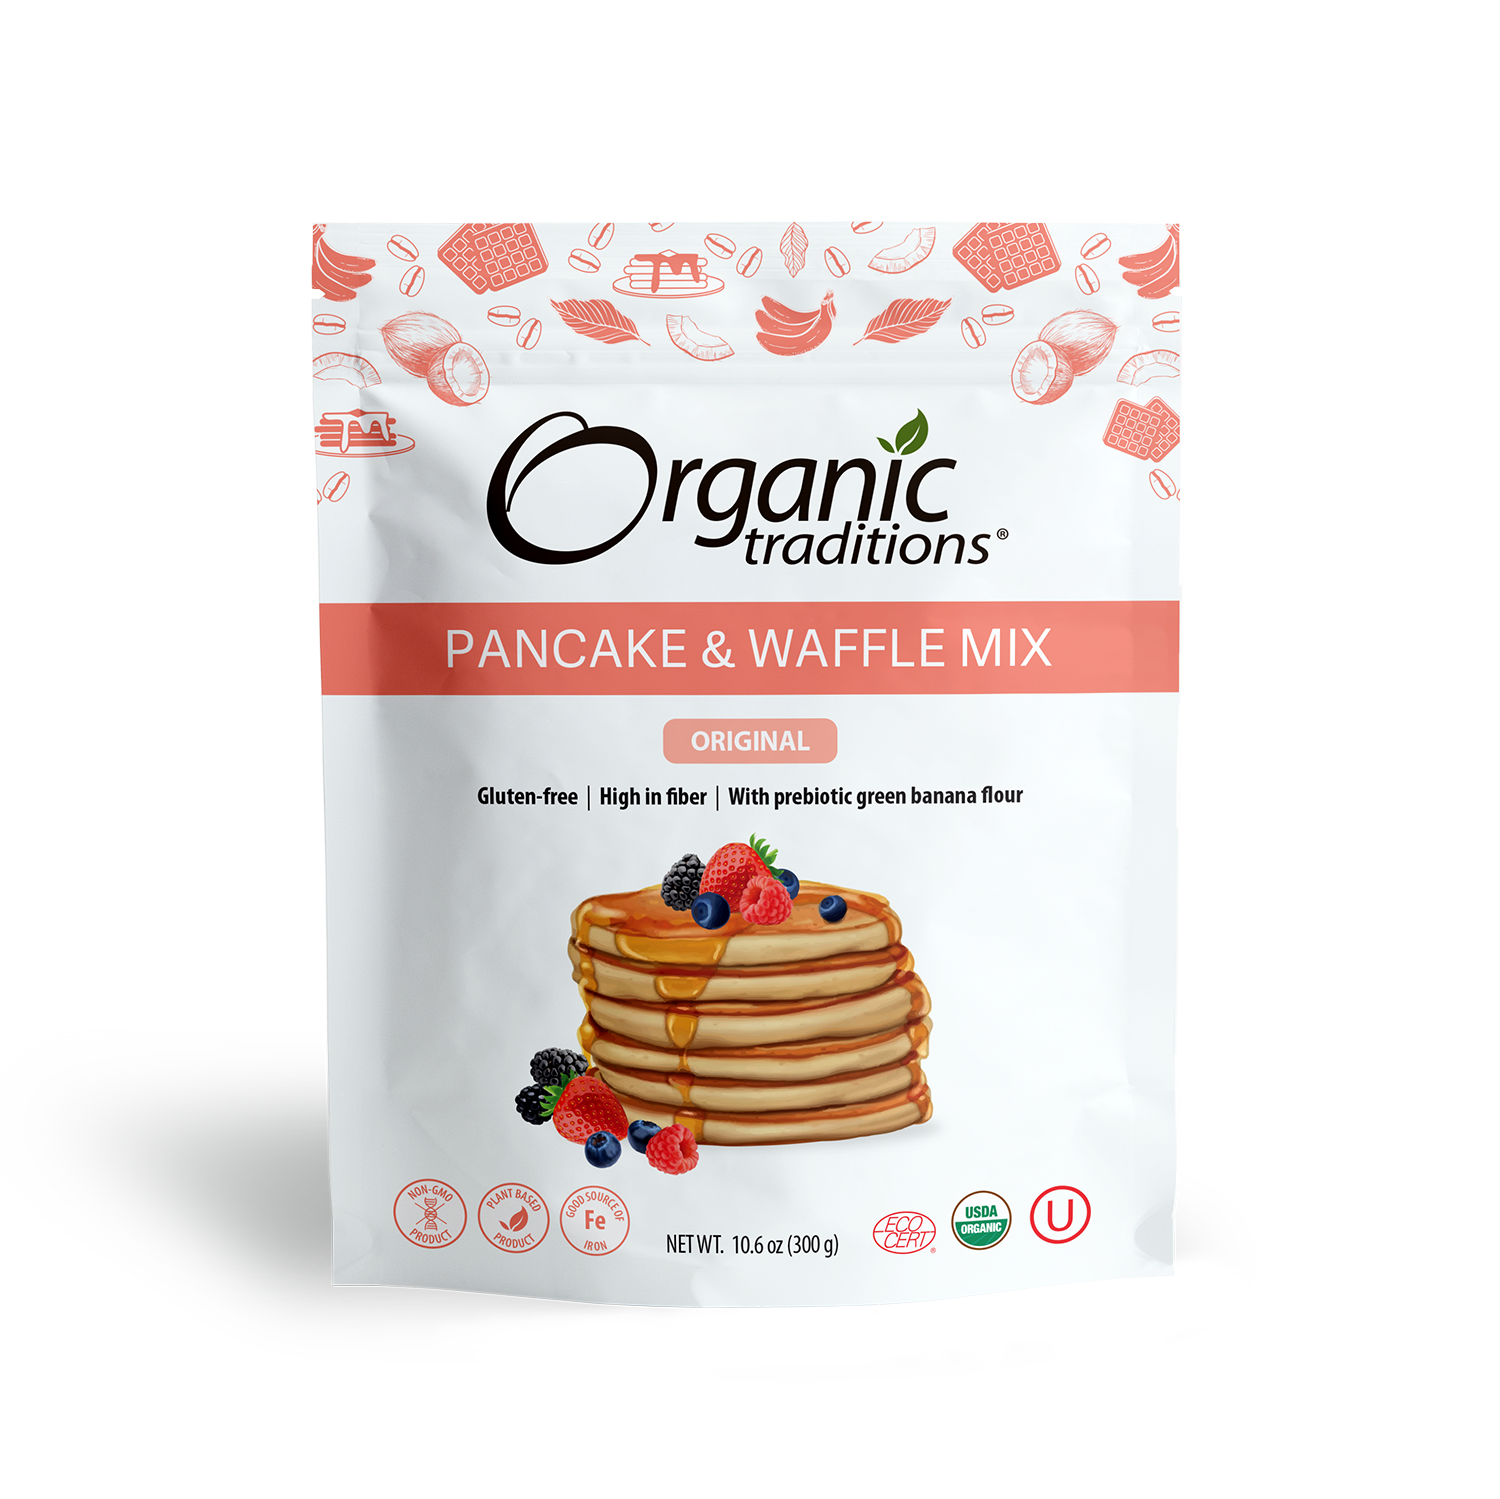 organic traditions original pancake and waffle mix front of bag image